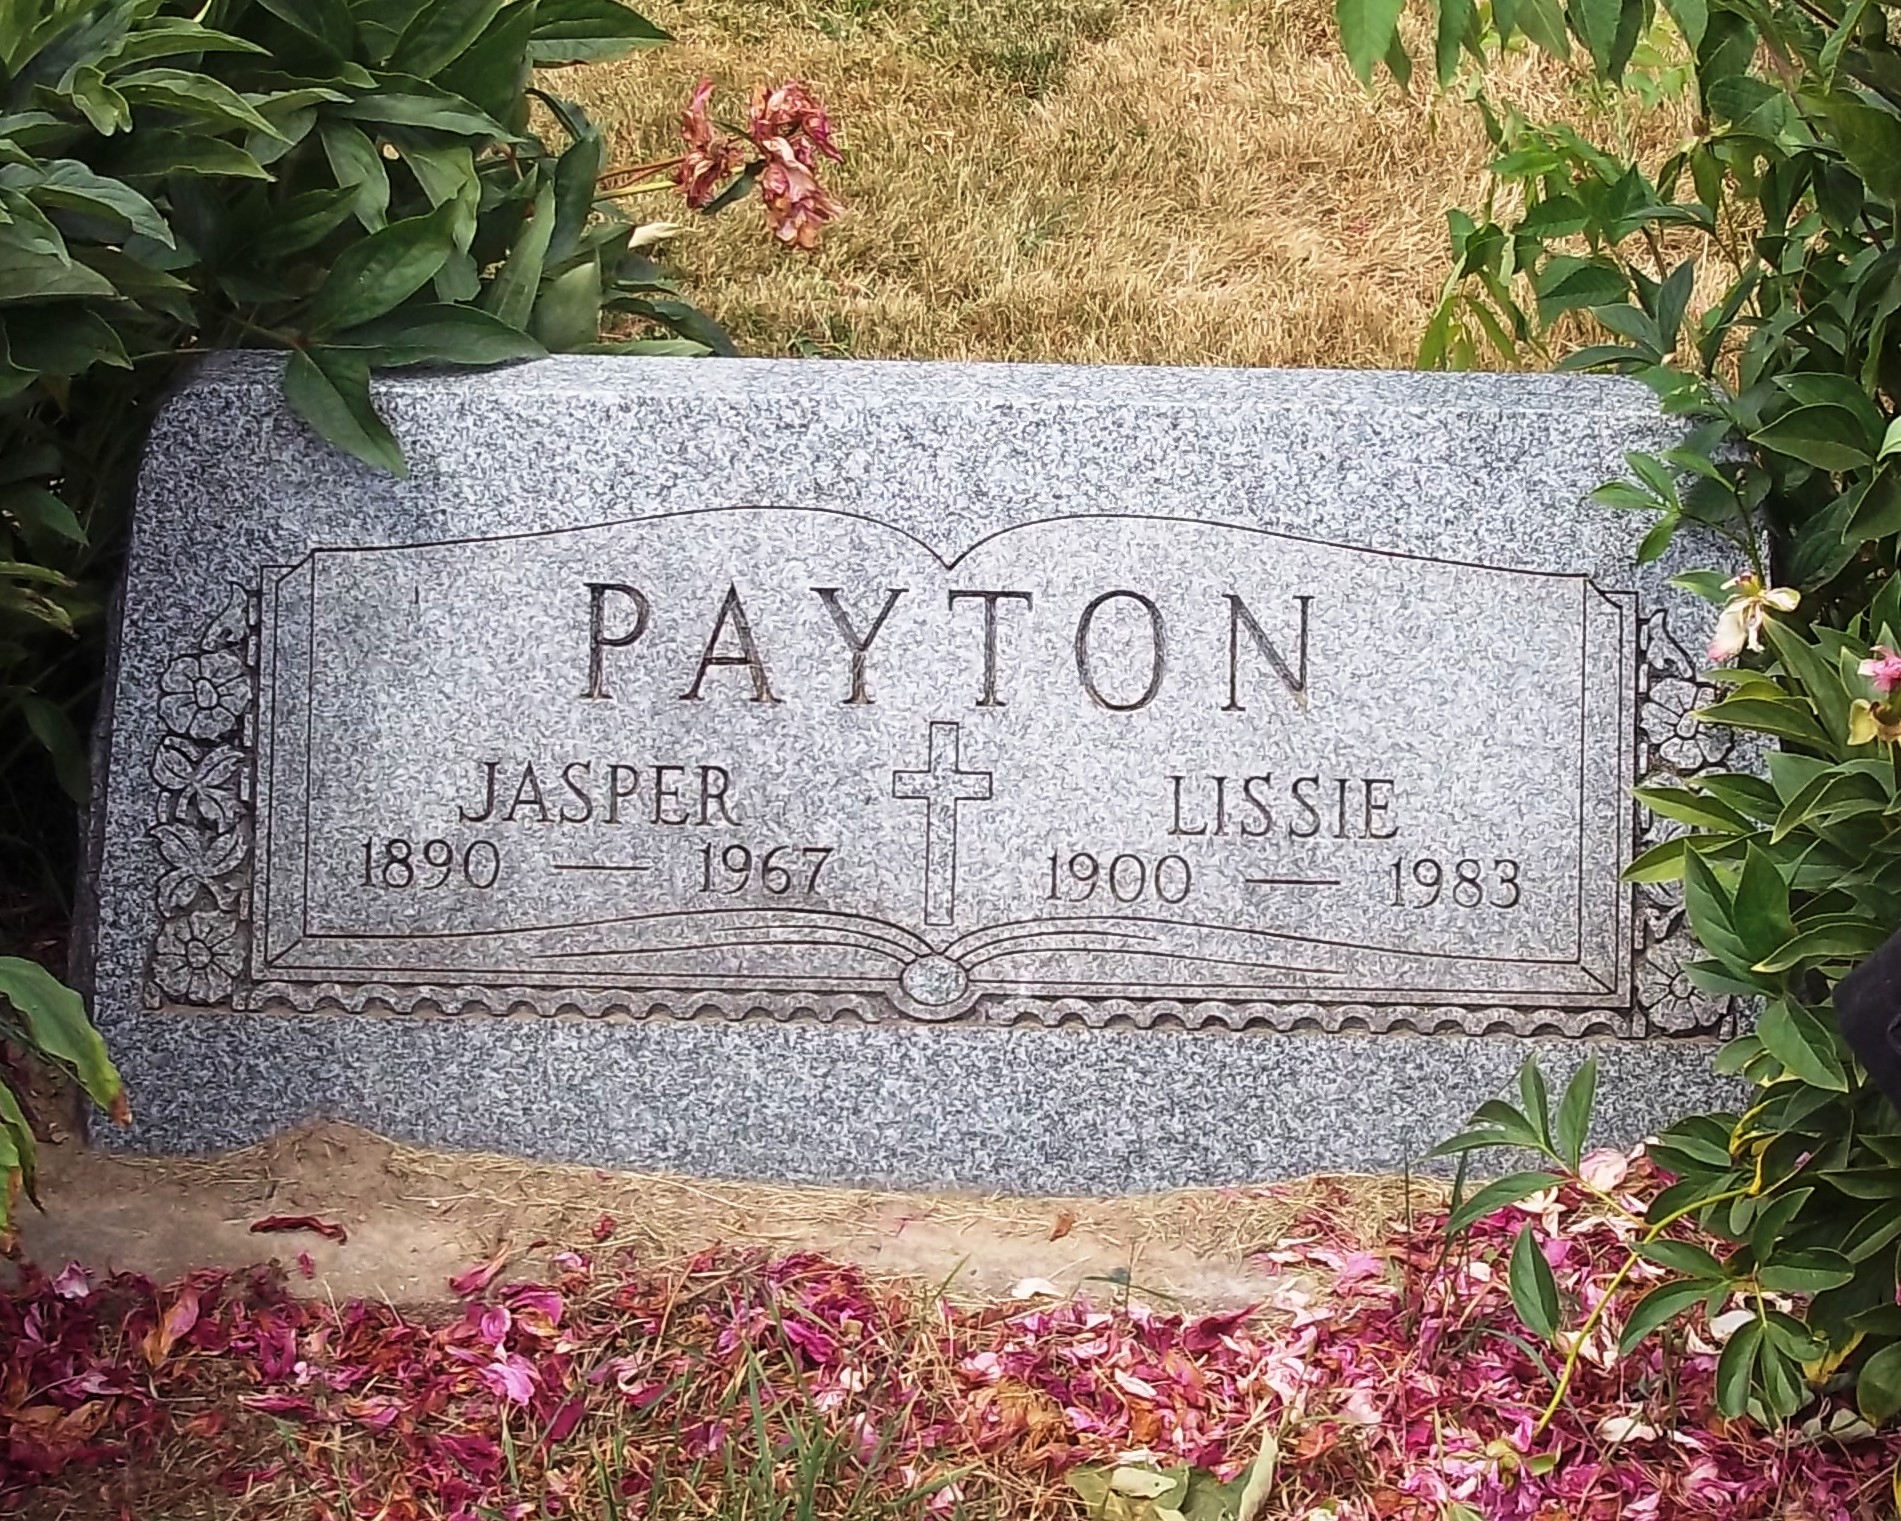 Jasper & Lissie Payton gravesite